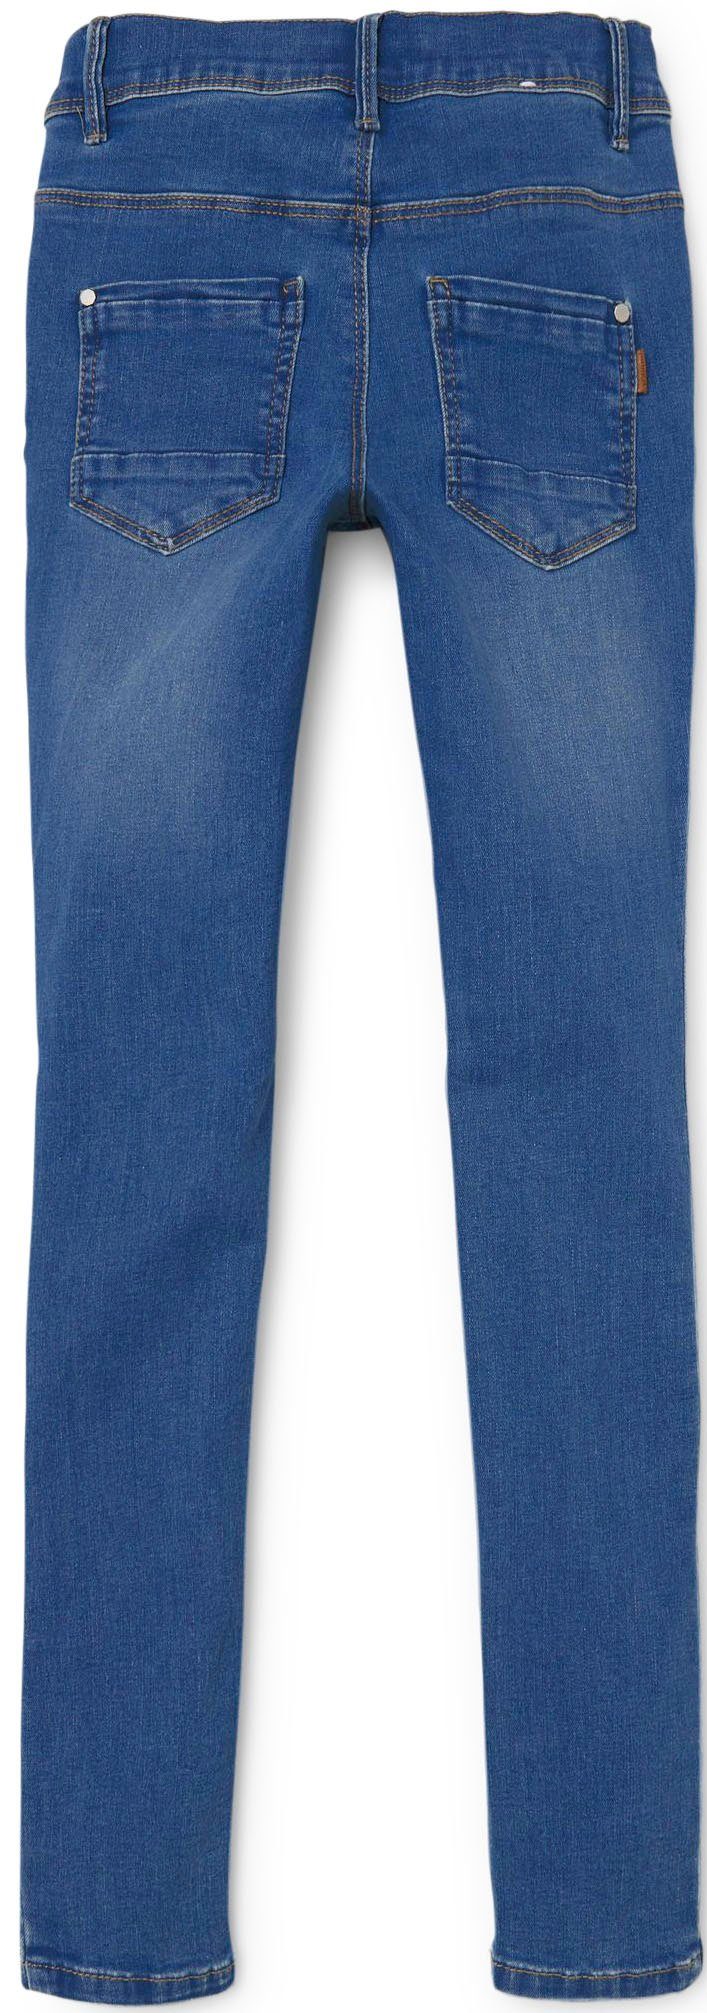 NKFPOLLY Name Stretch-Jeans DNMATASI PANT Blau It